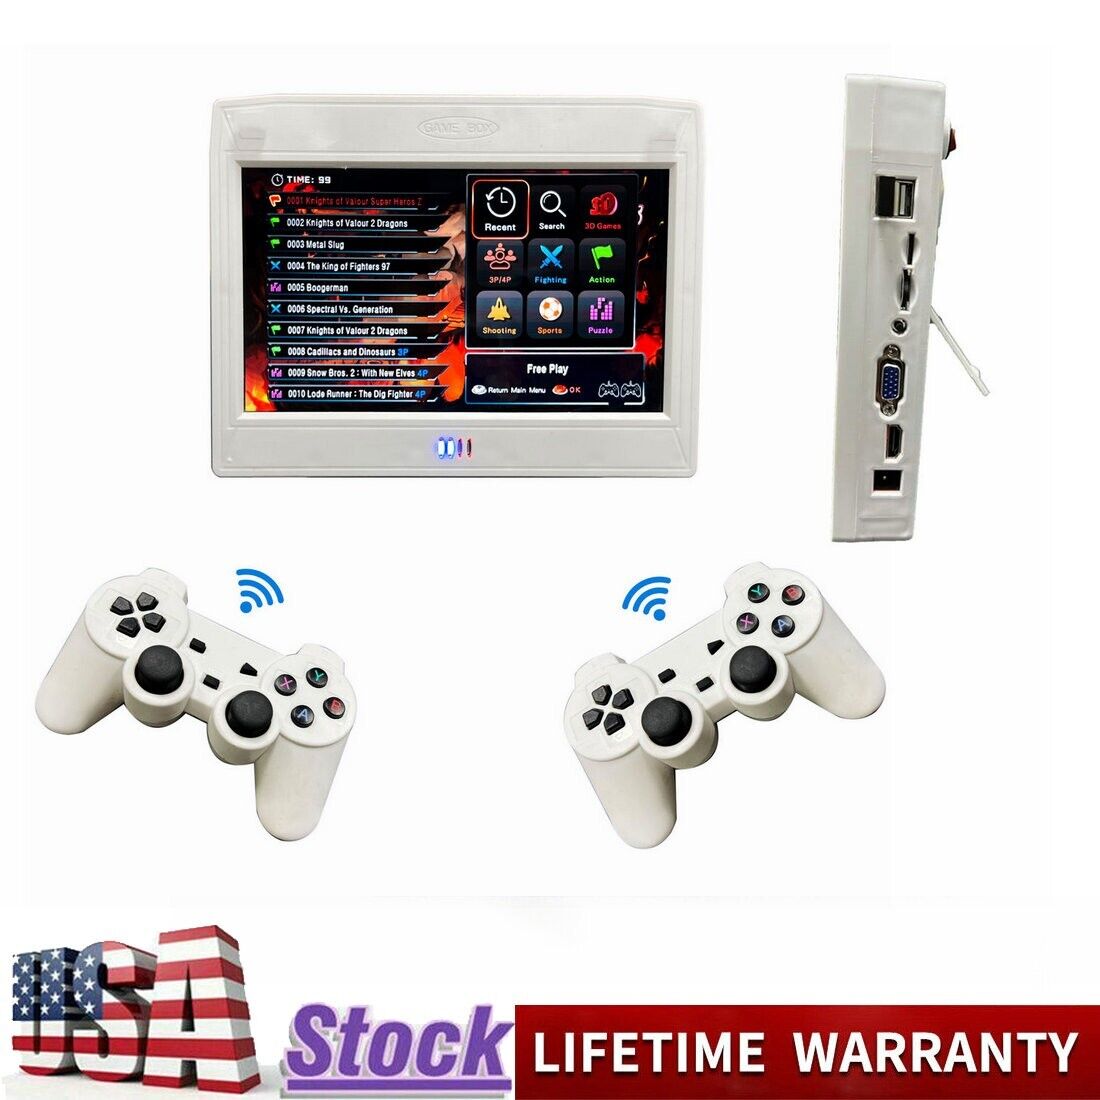 Portable Pandora Box  26800 in 1 Retro Video Games 3D Bluetooth Arcade Console